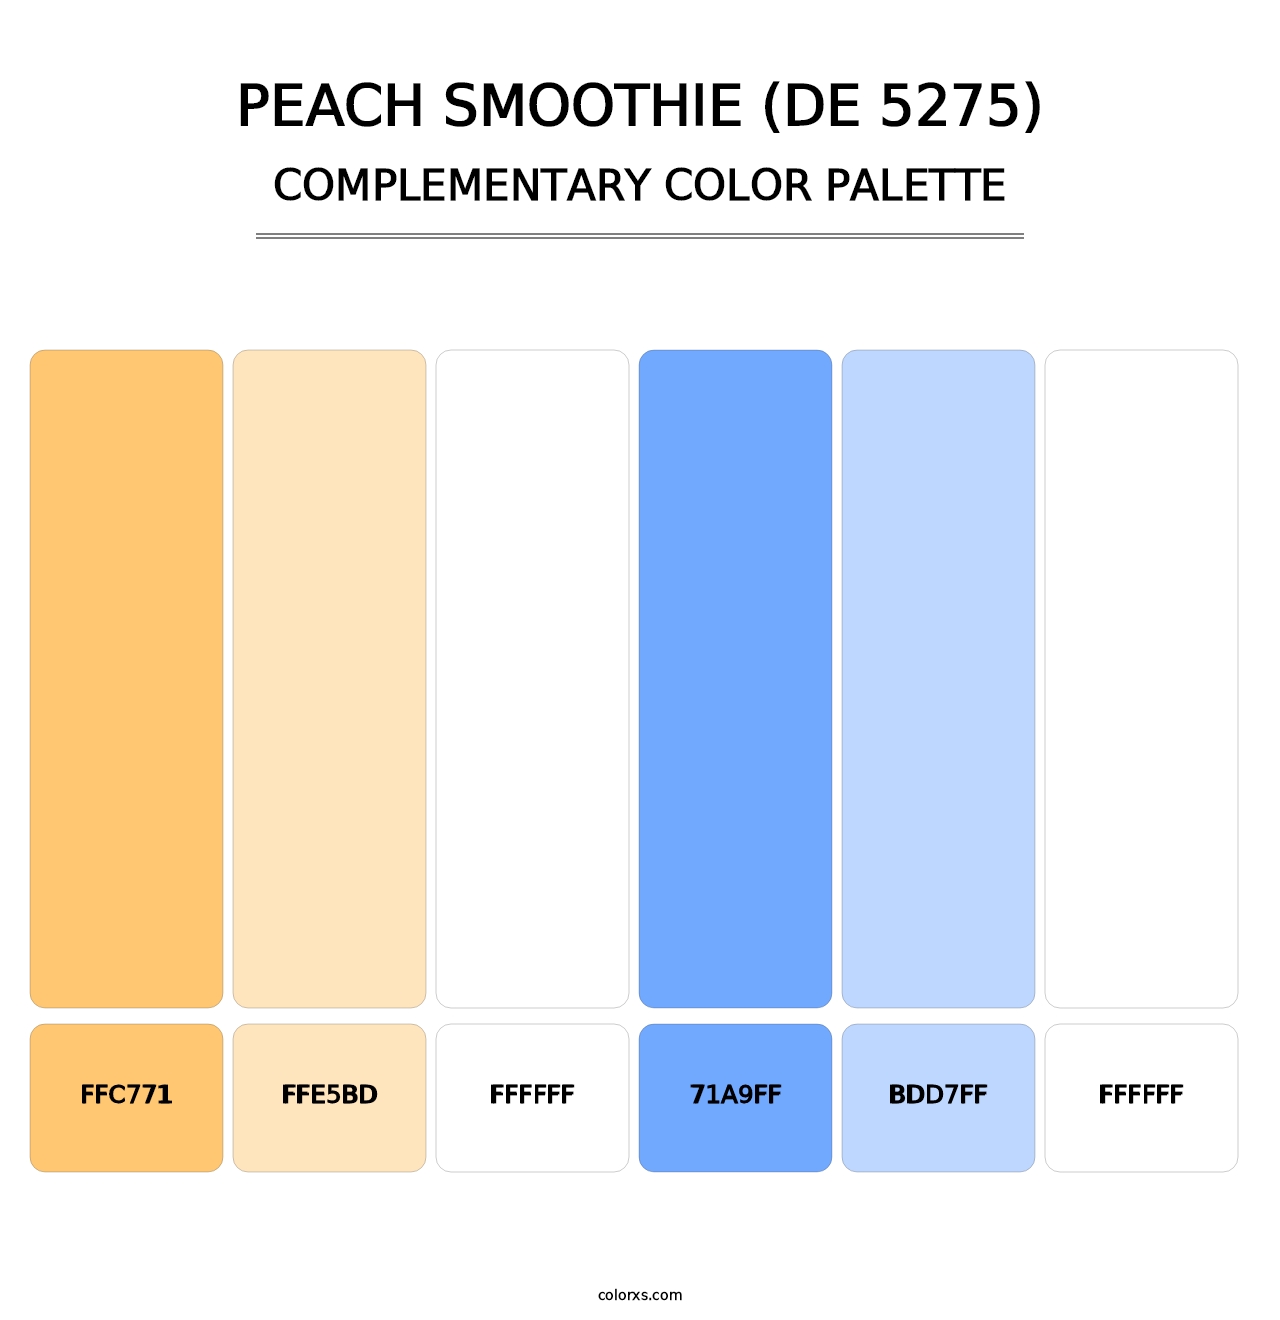 Peach Smoothie (DE 5275) - Complementary Color Palette